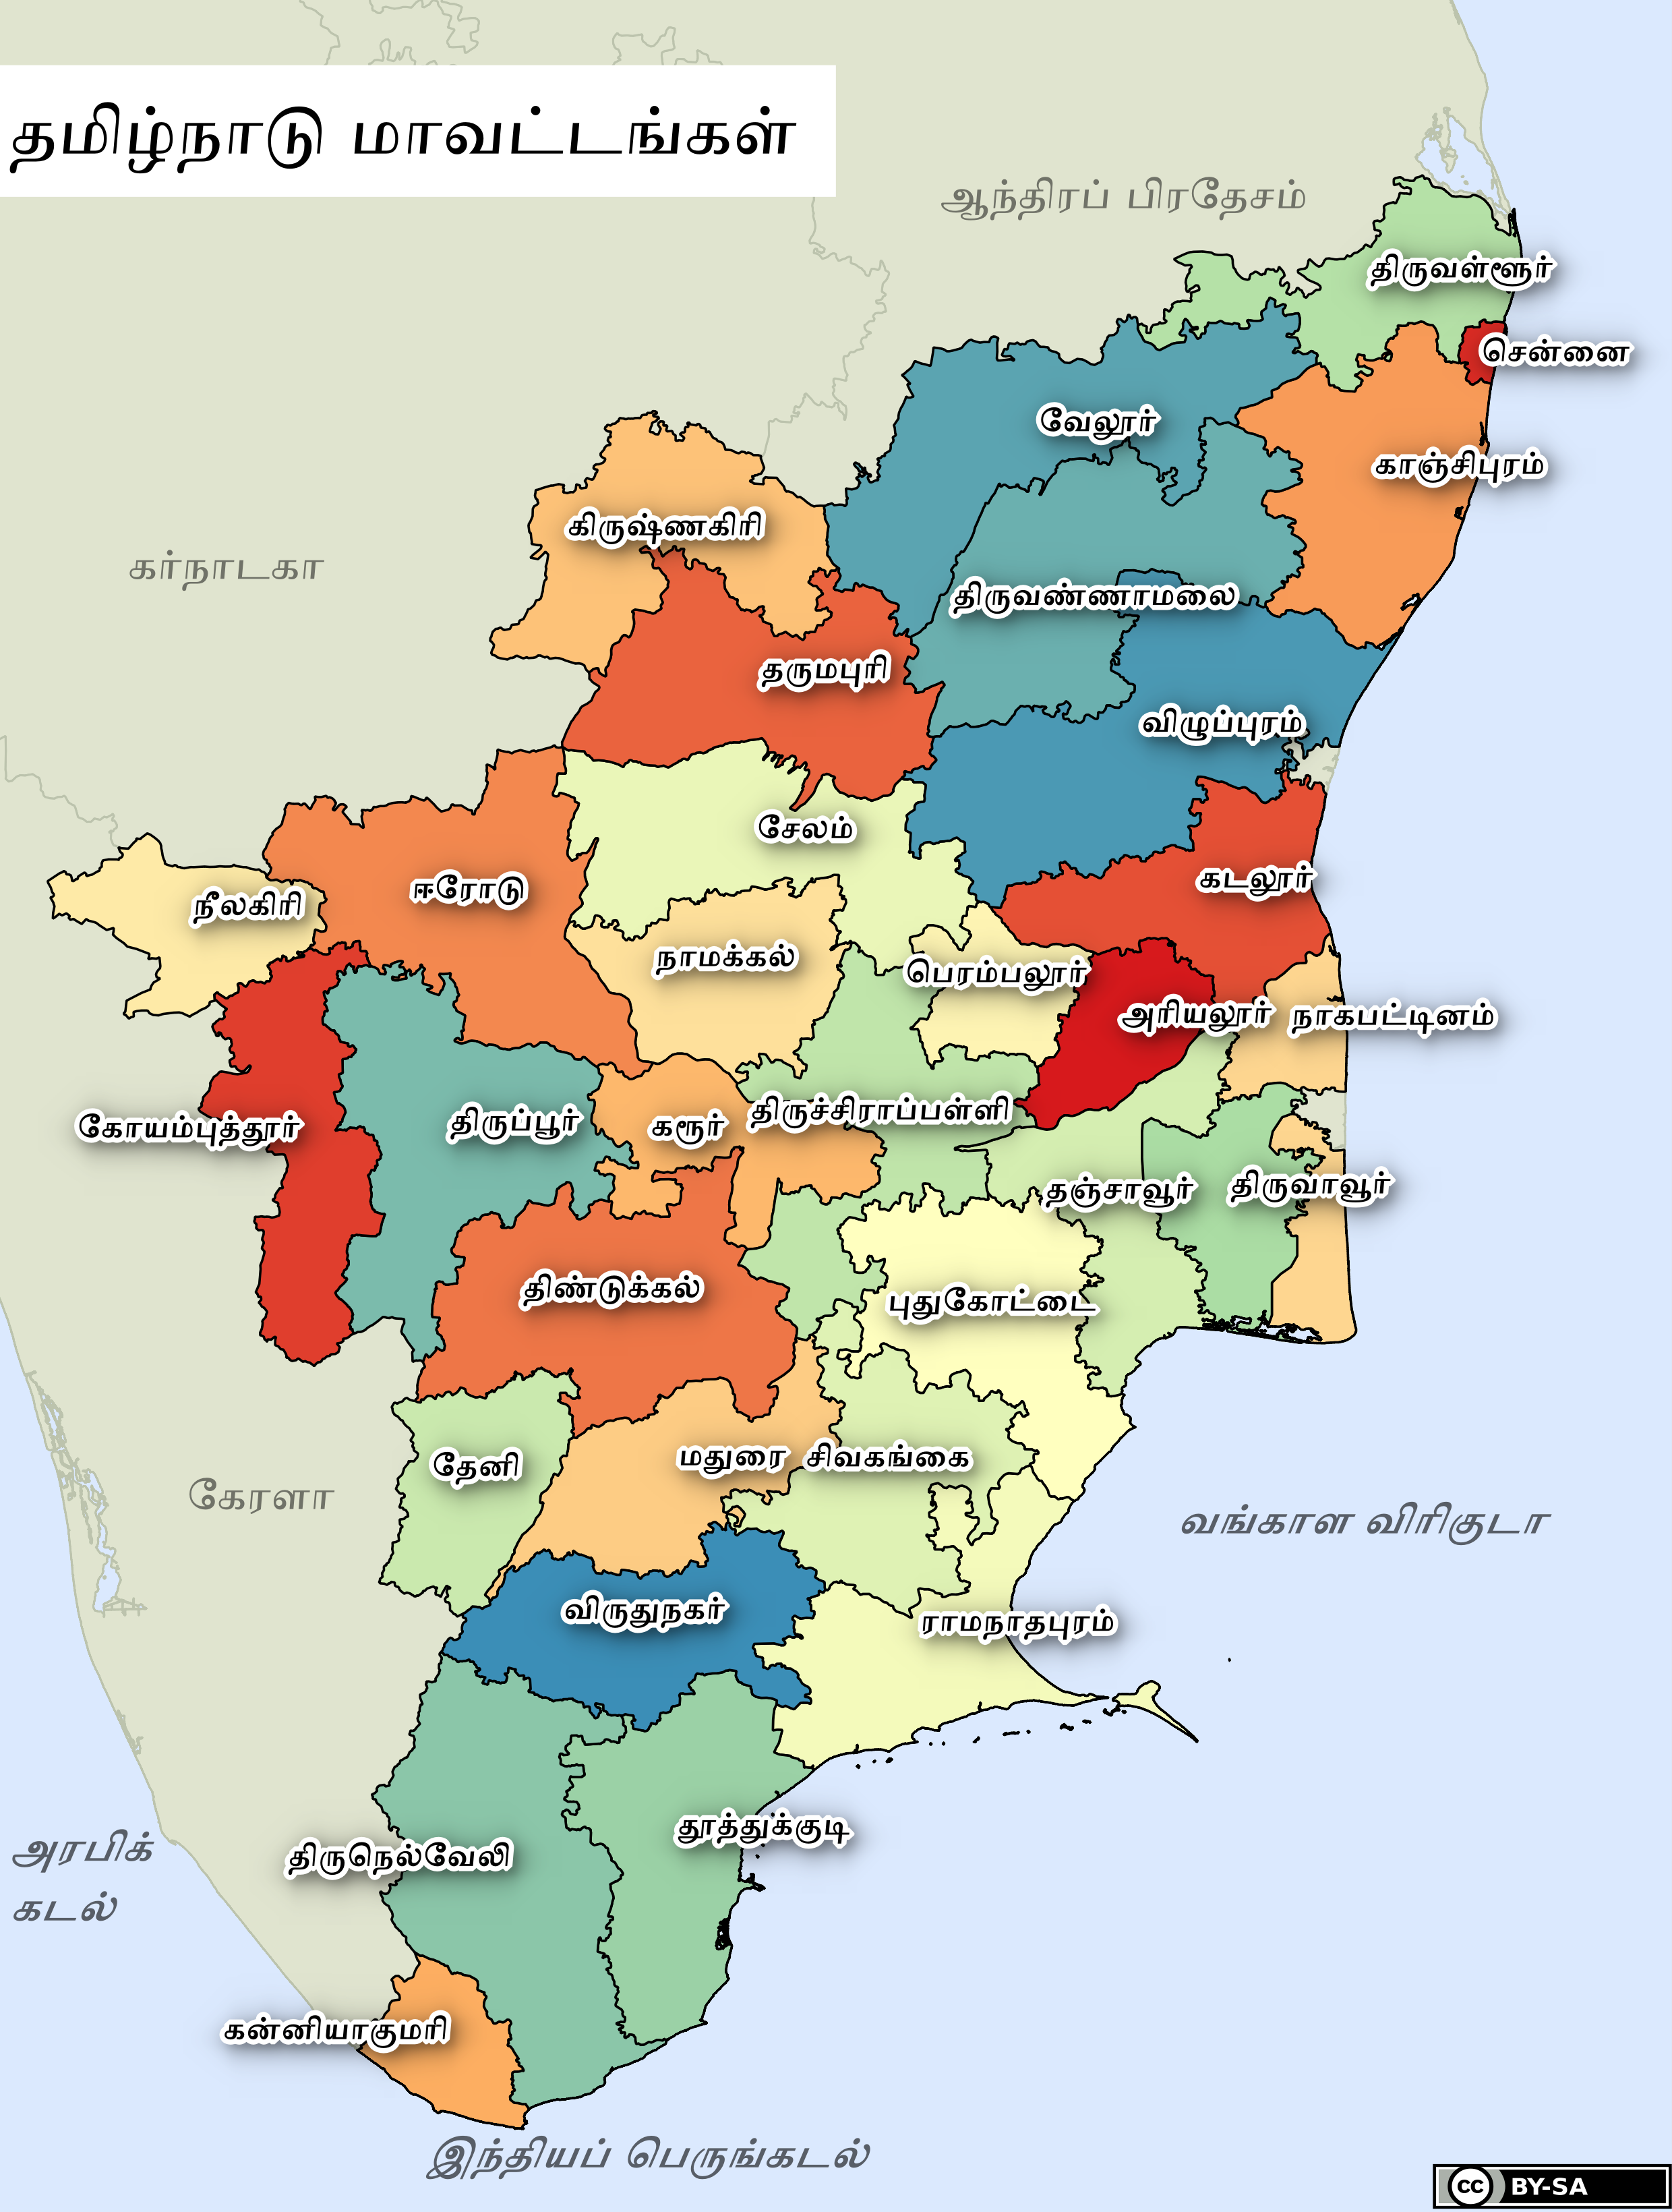 Tamilnadu Map inTamil.png